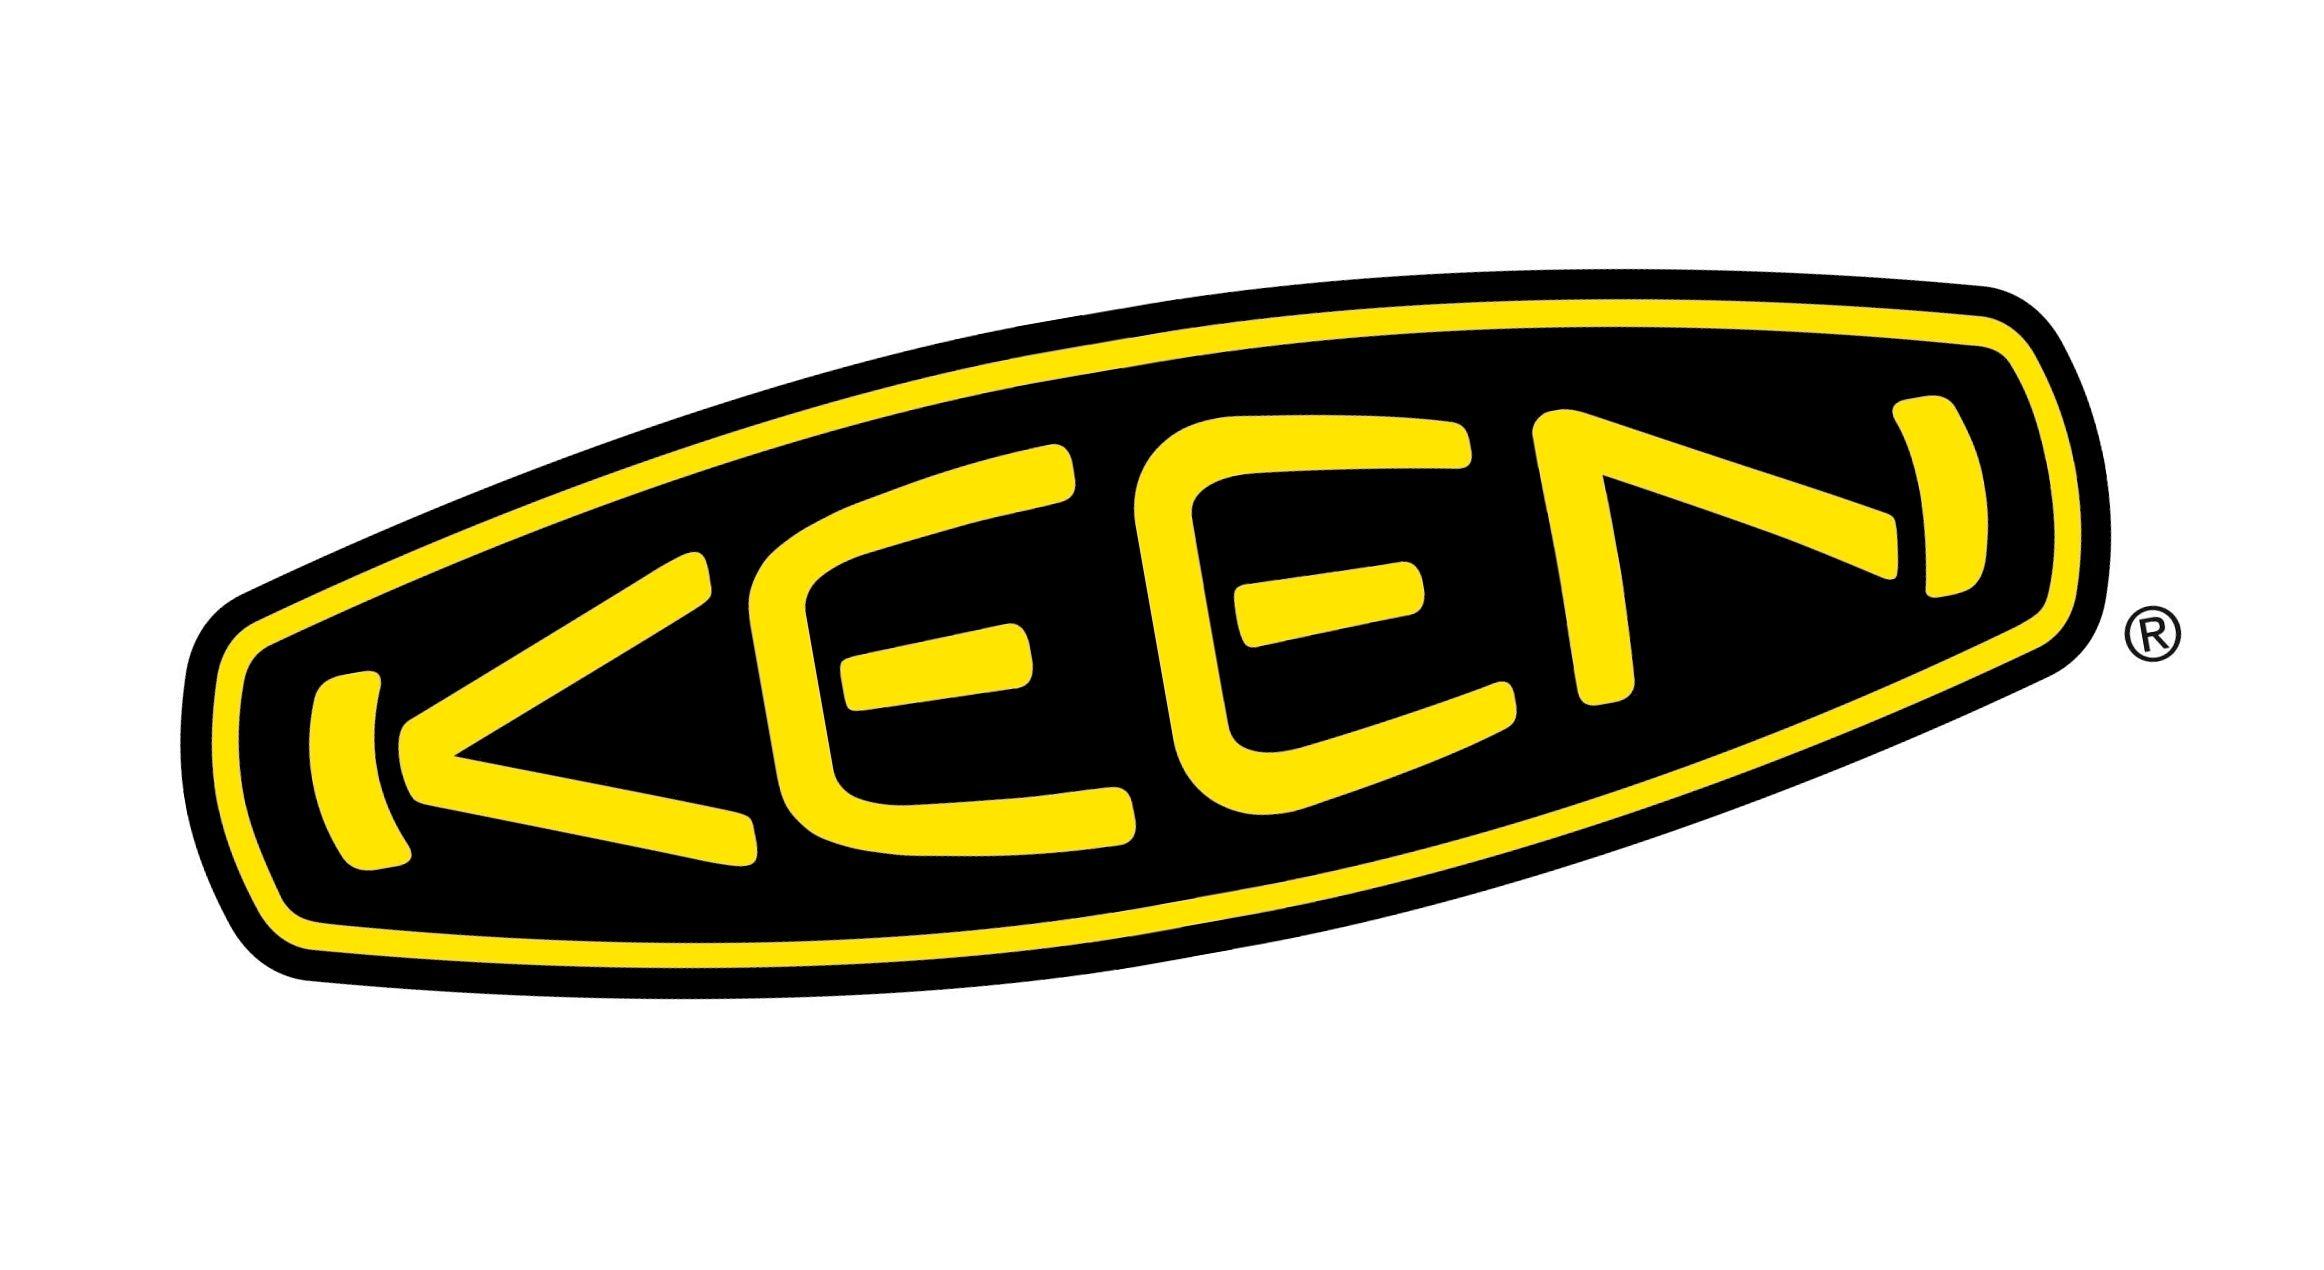 Keen Logo - Keen – Logos Download